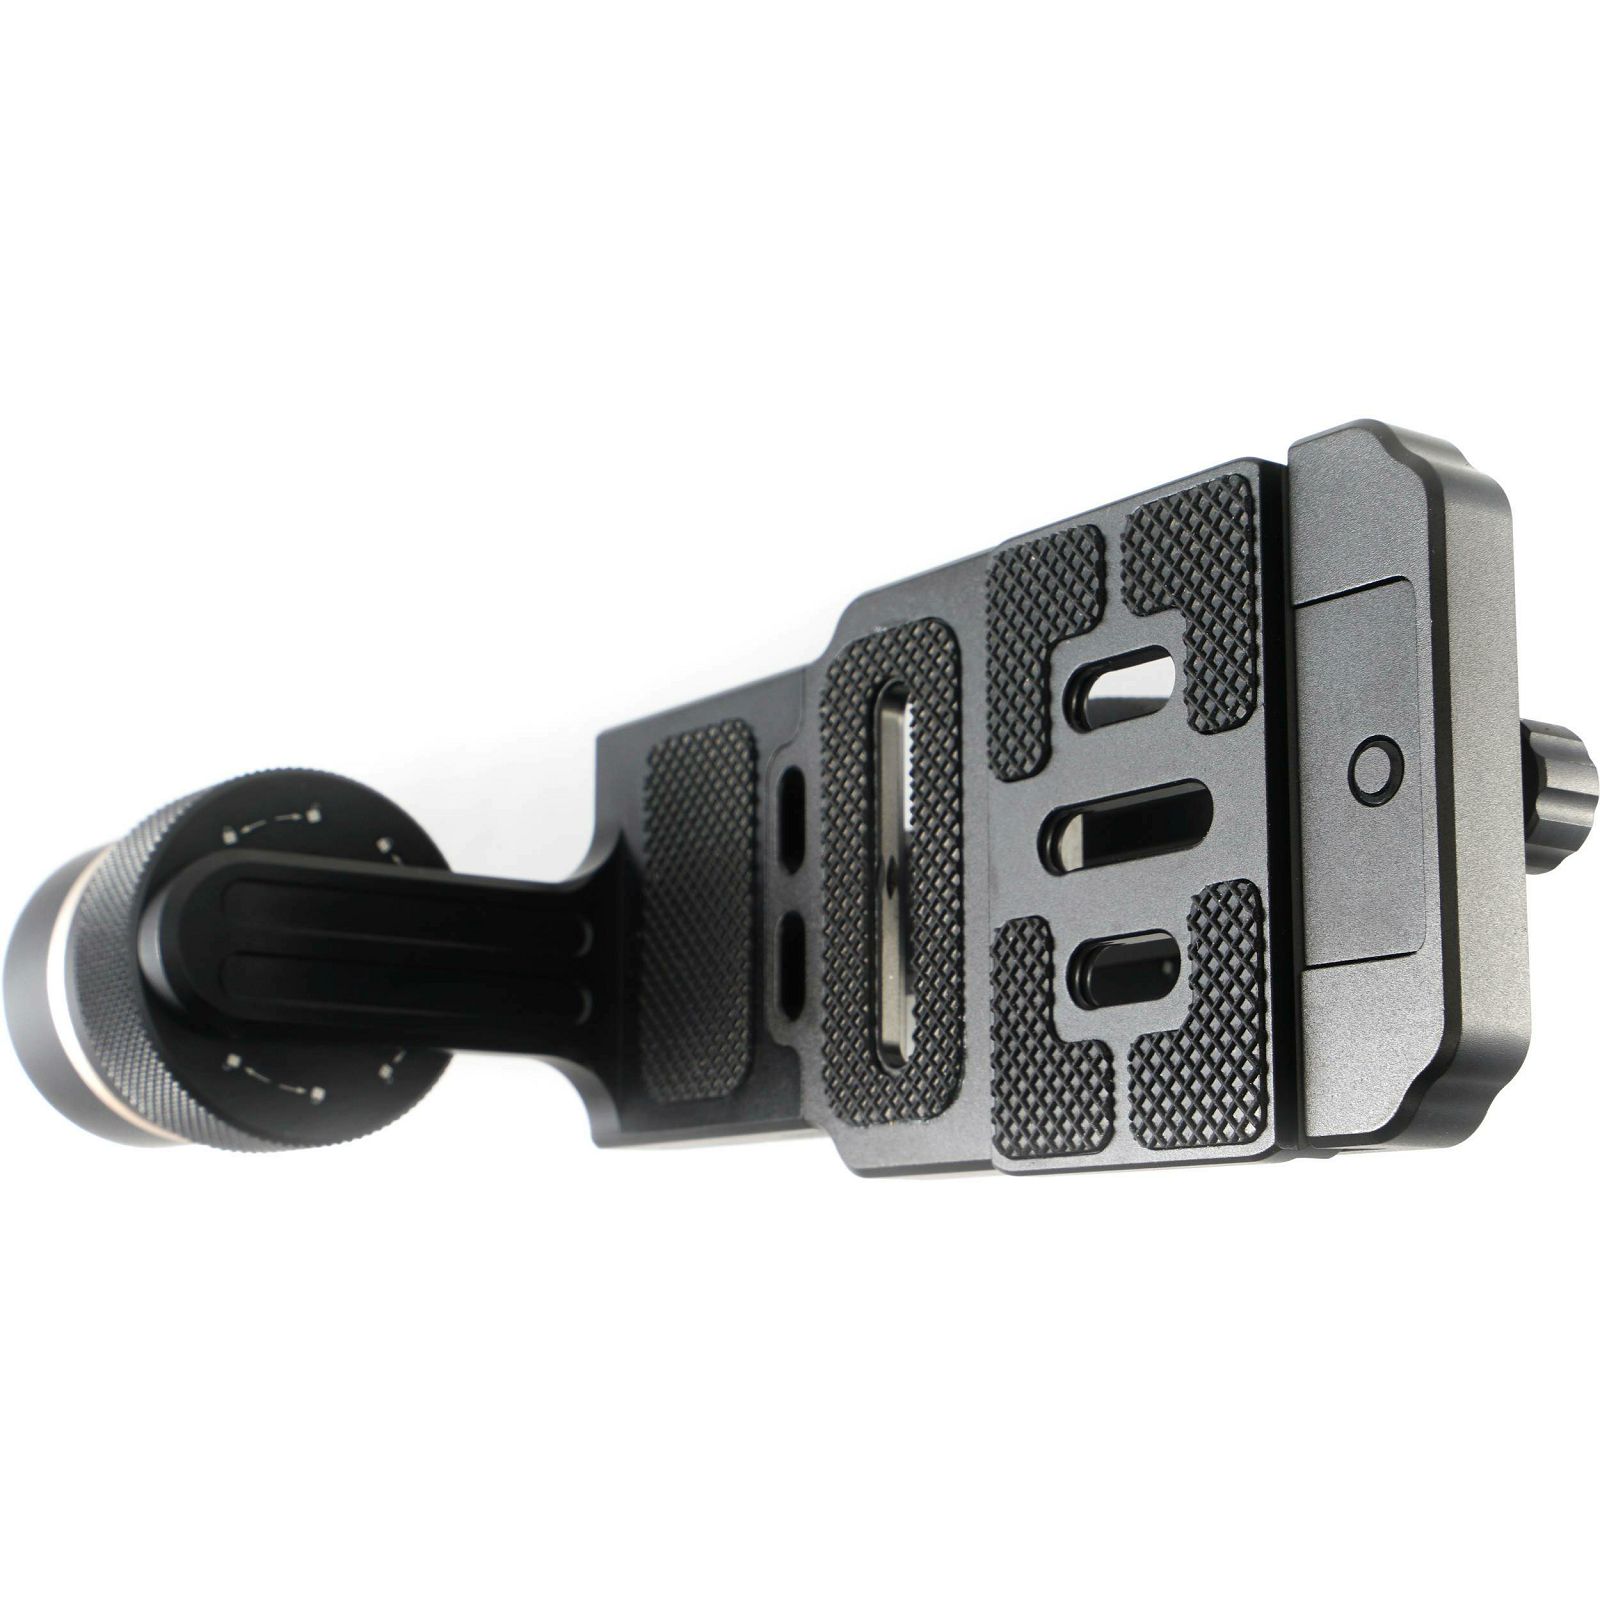 FeiyuTech G6 Plus Gimbal Stabilizer 3-osni stabilizator za video snimanje